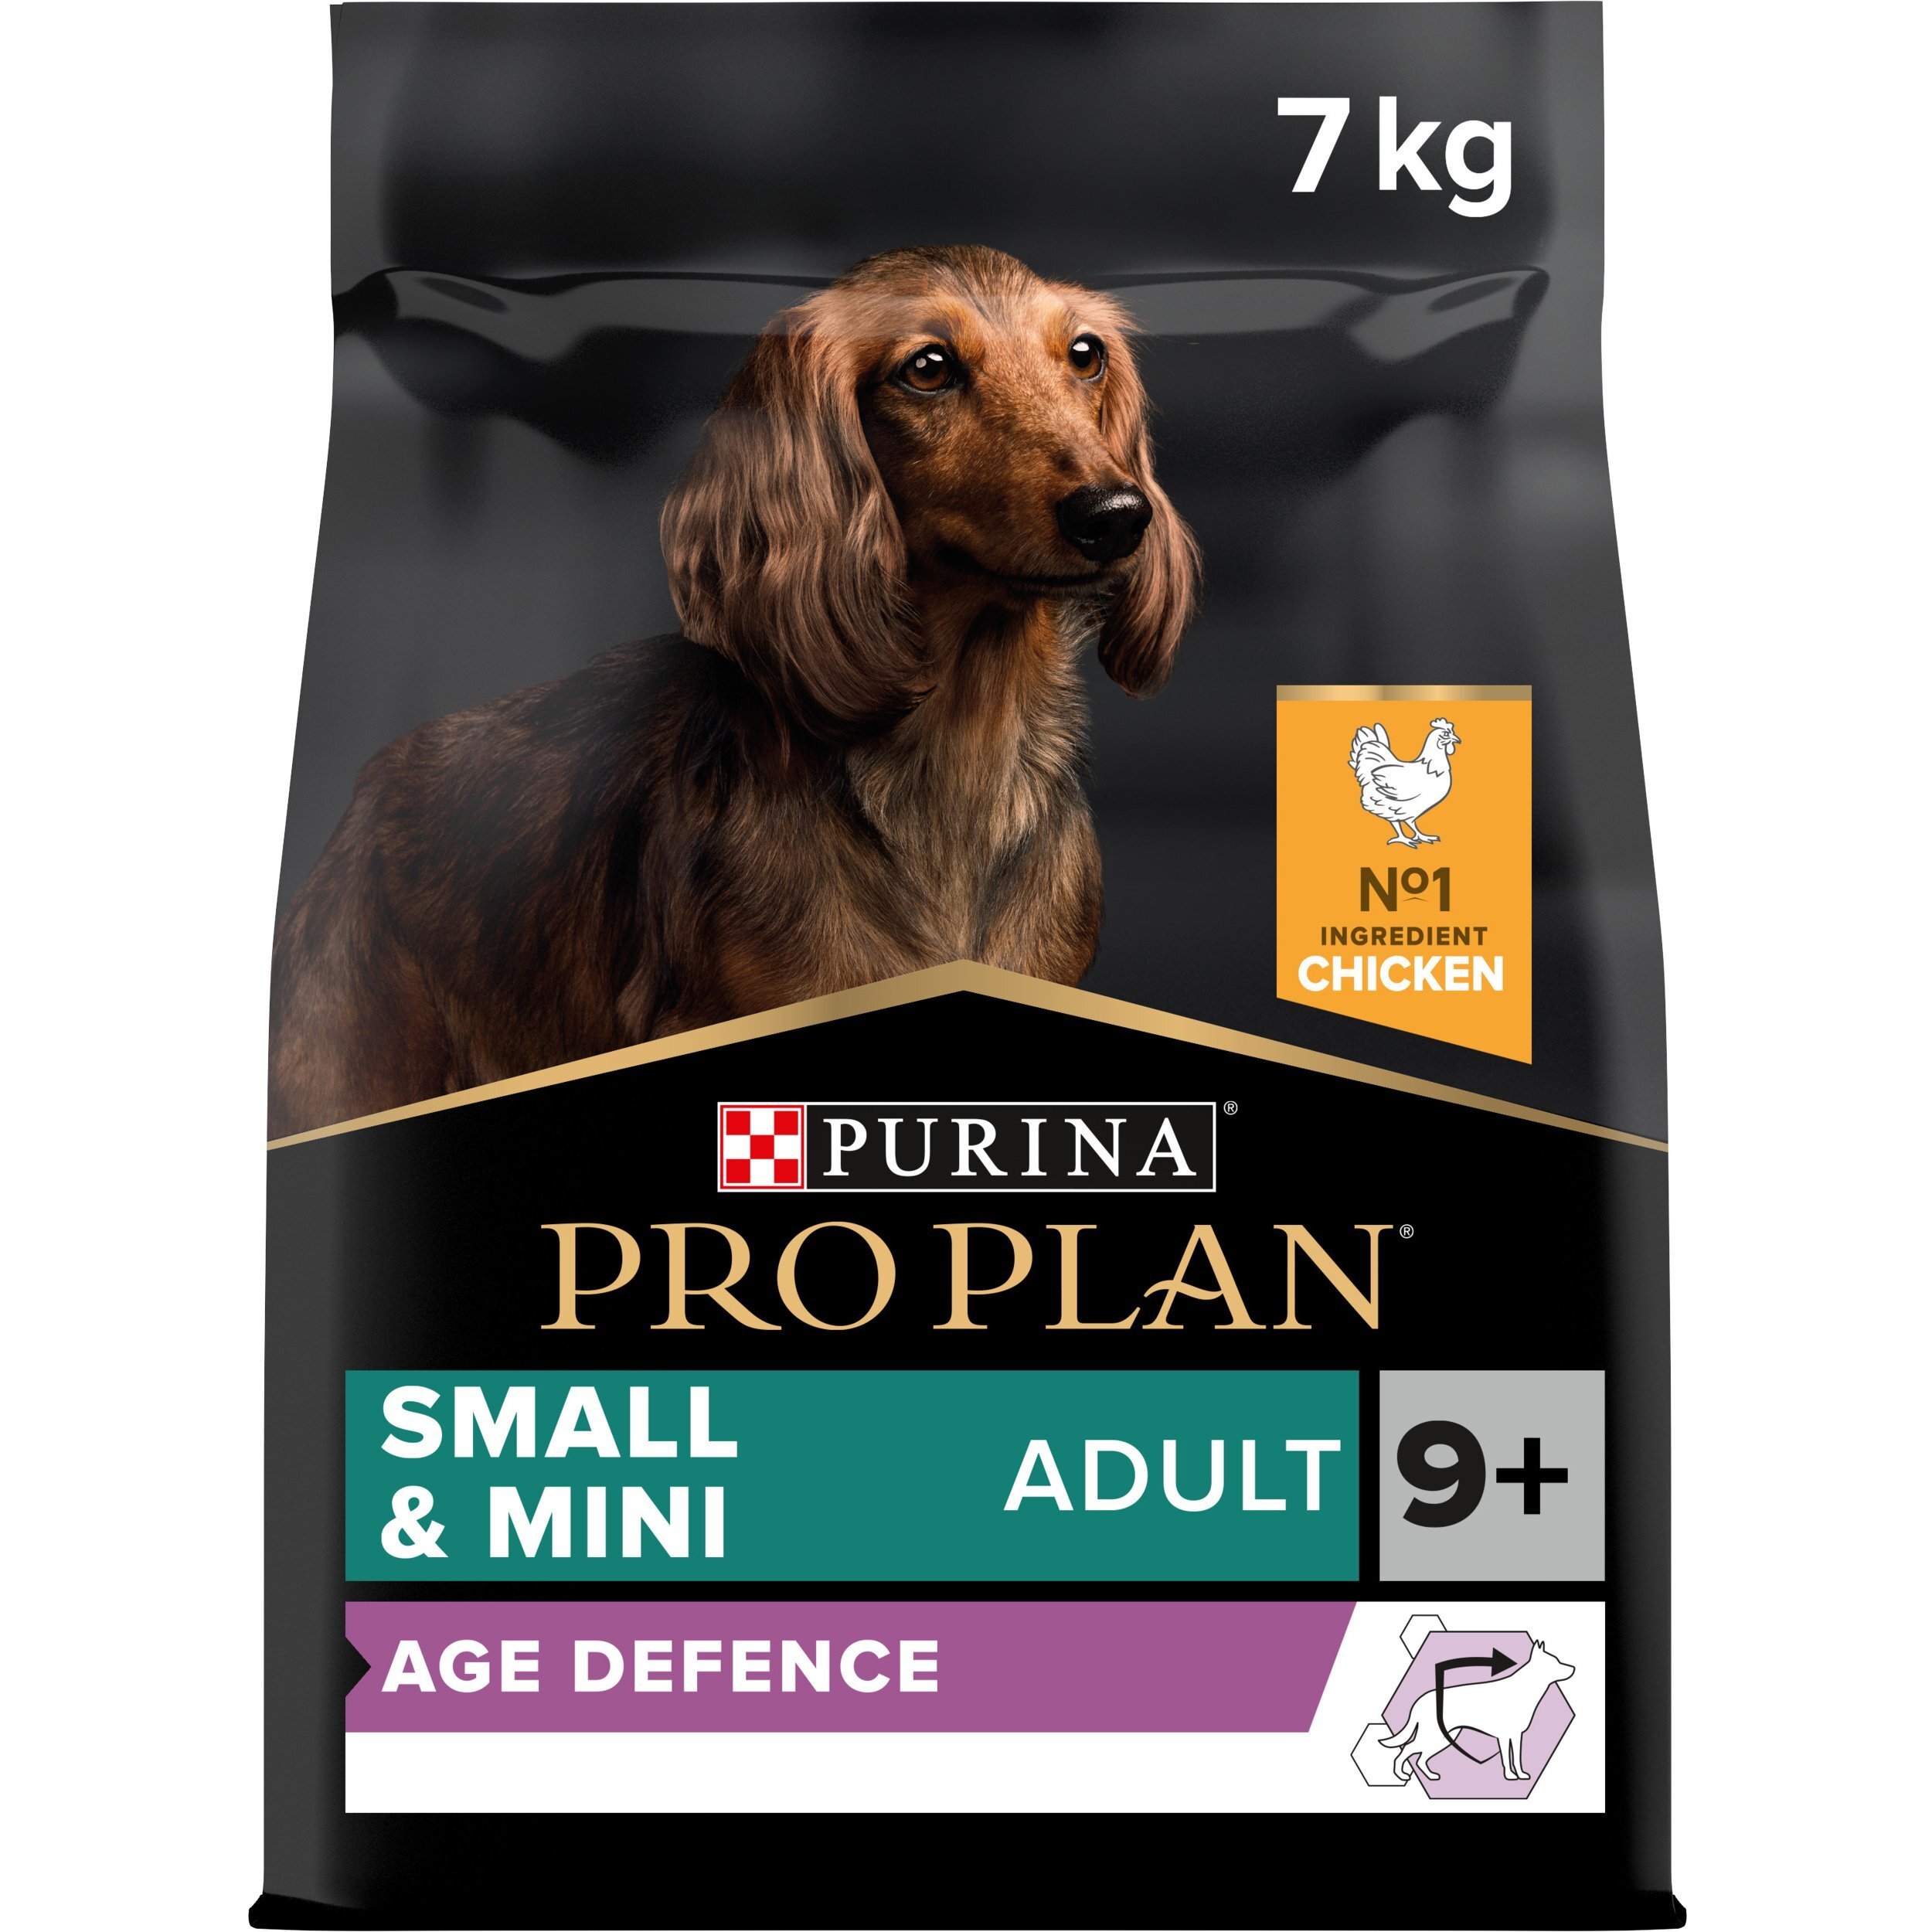 Сухой корм для собак мелких пород старше девяти лет Purina Pro Plan Small&Mini Adult 9+, с курицей, 7 кг фото 1